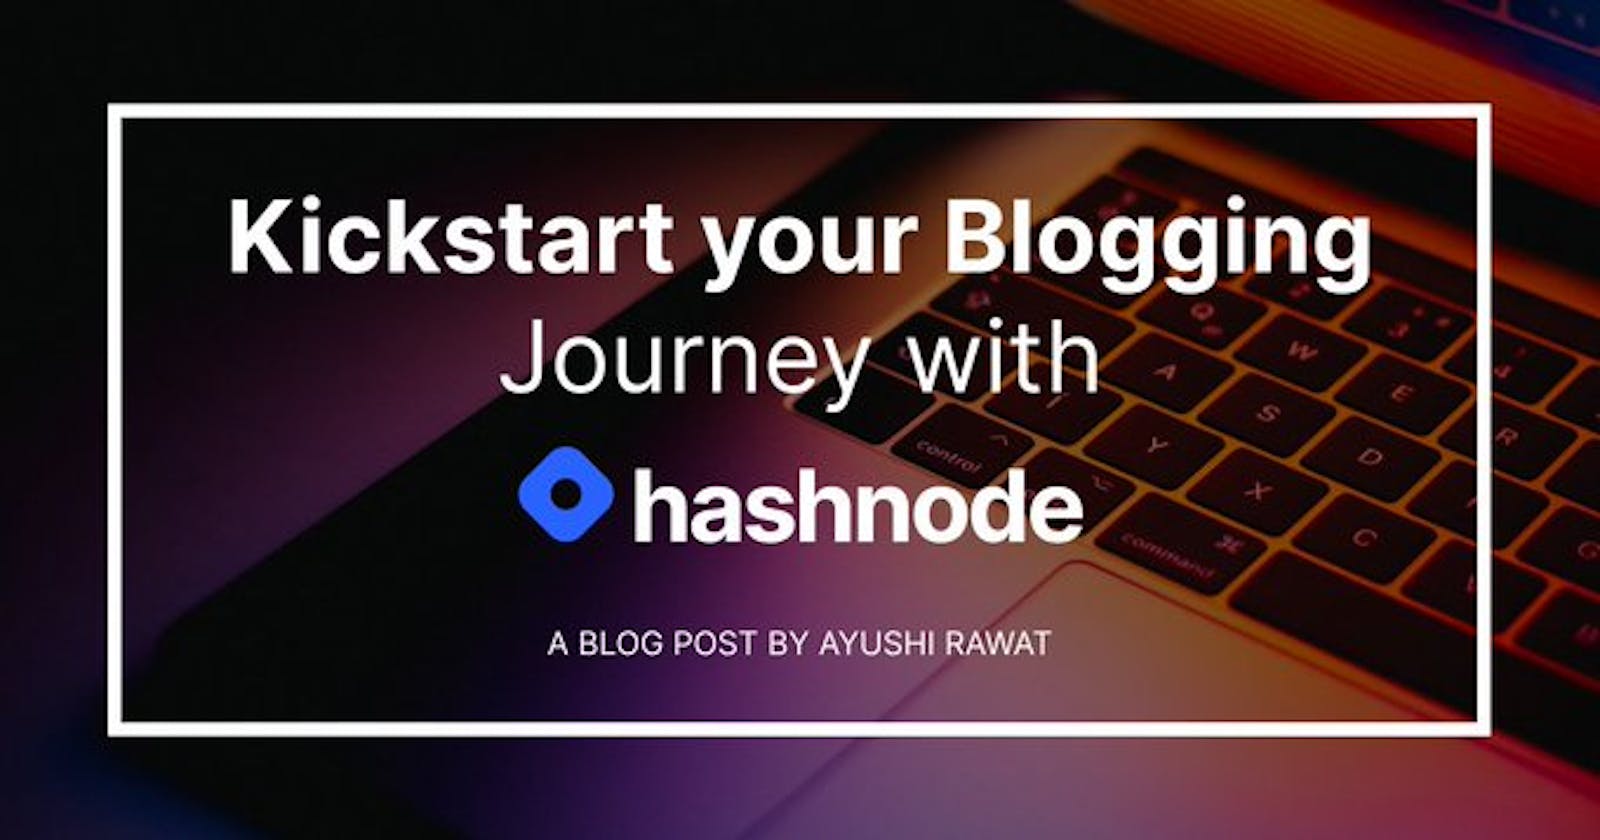 Kickstart your Blogging Journey with Hashnode!